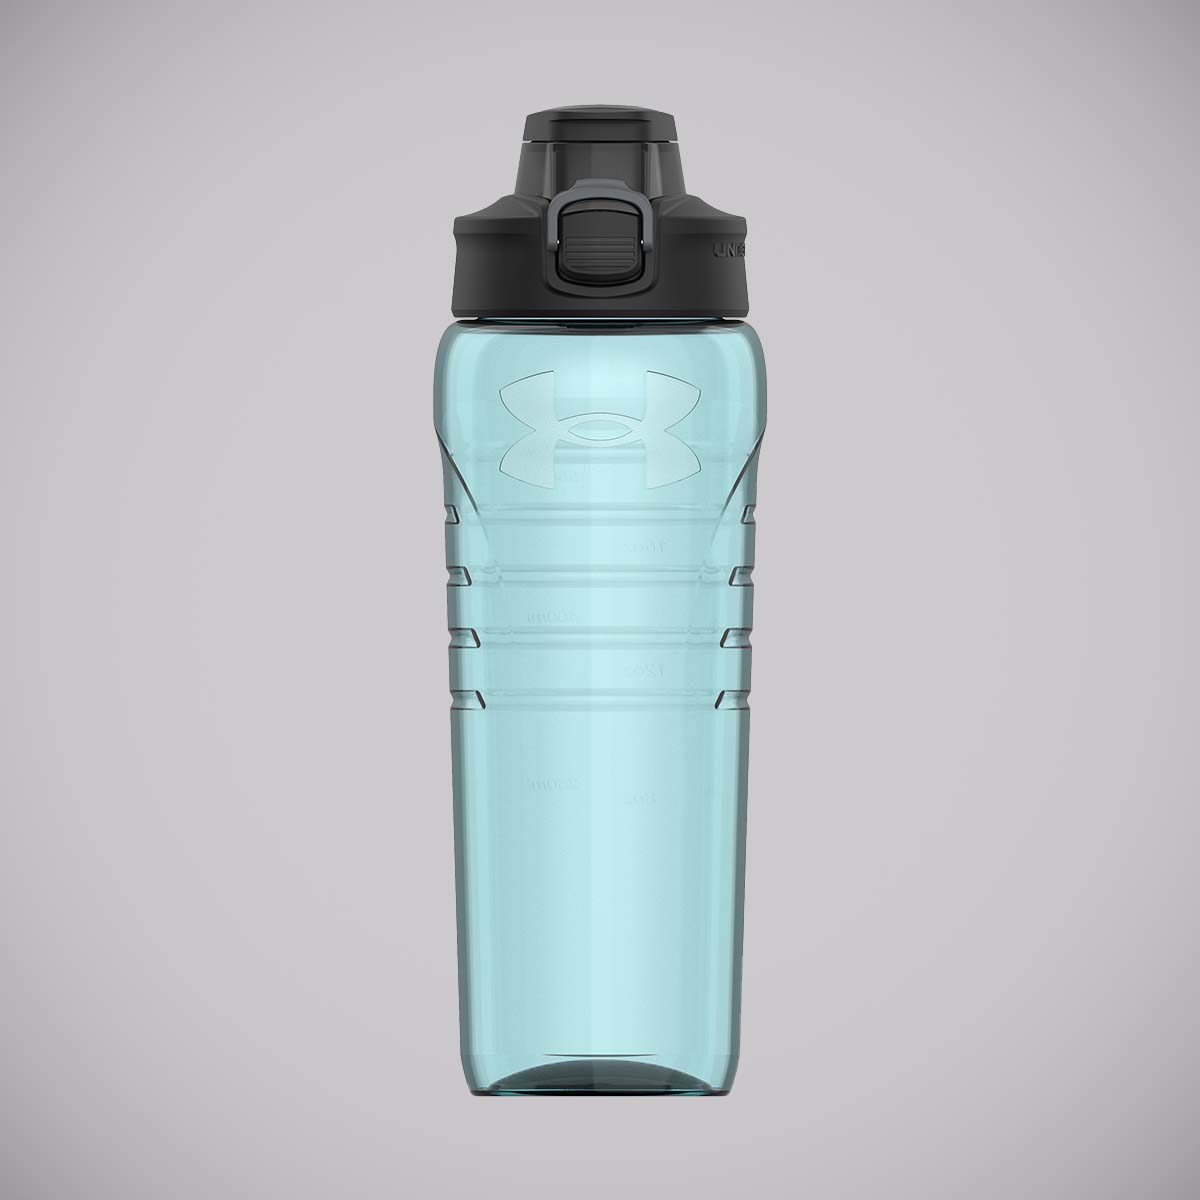 Under Armour Draft 24-oz. Tritan Water Bottle, Blue